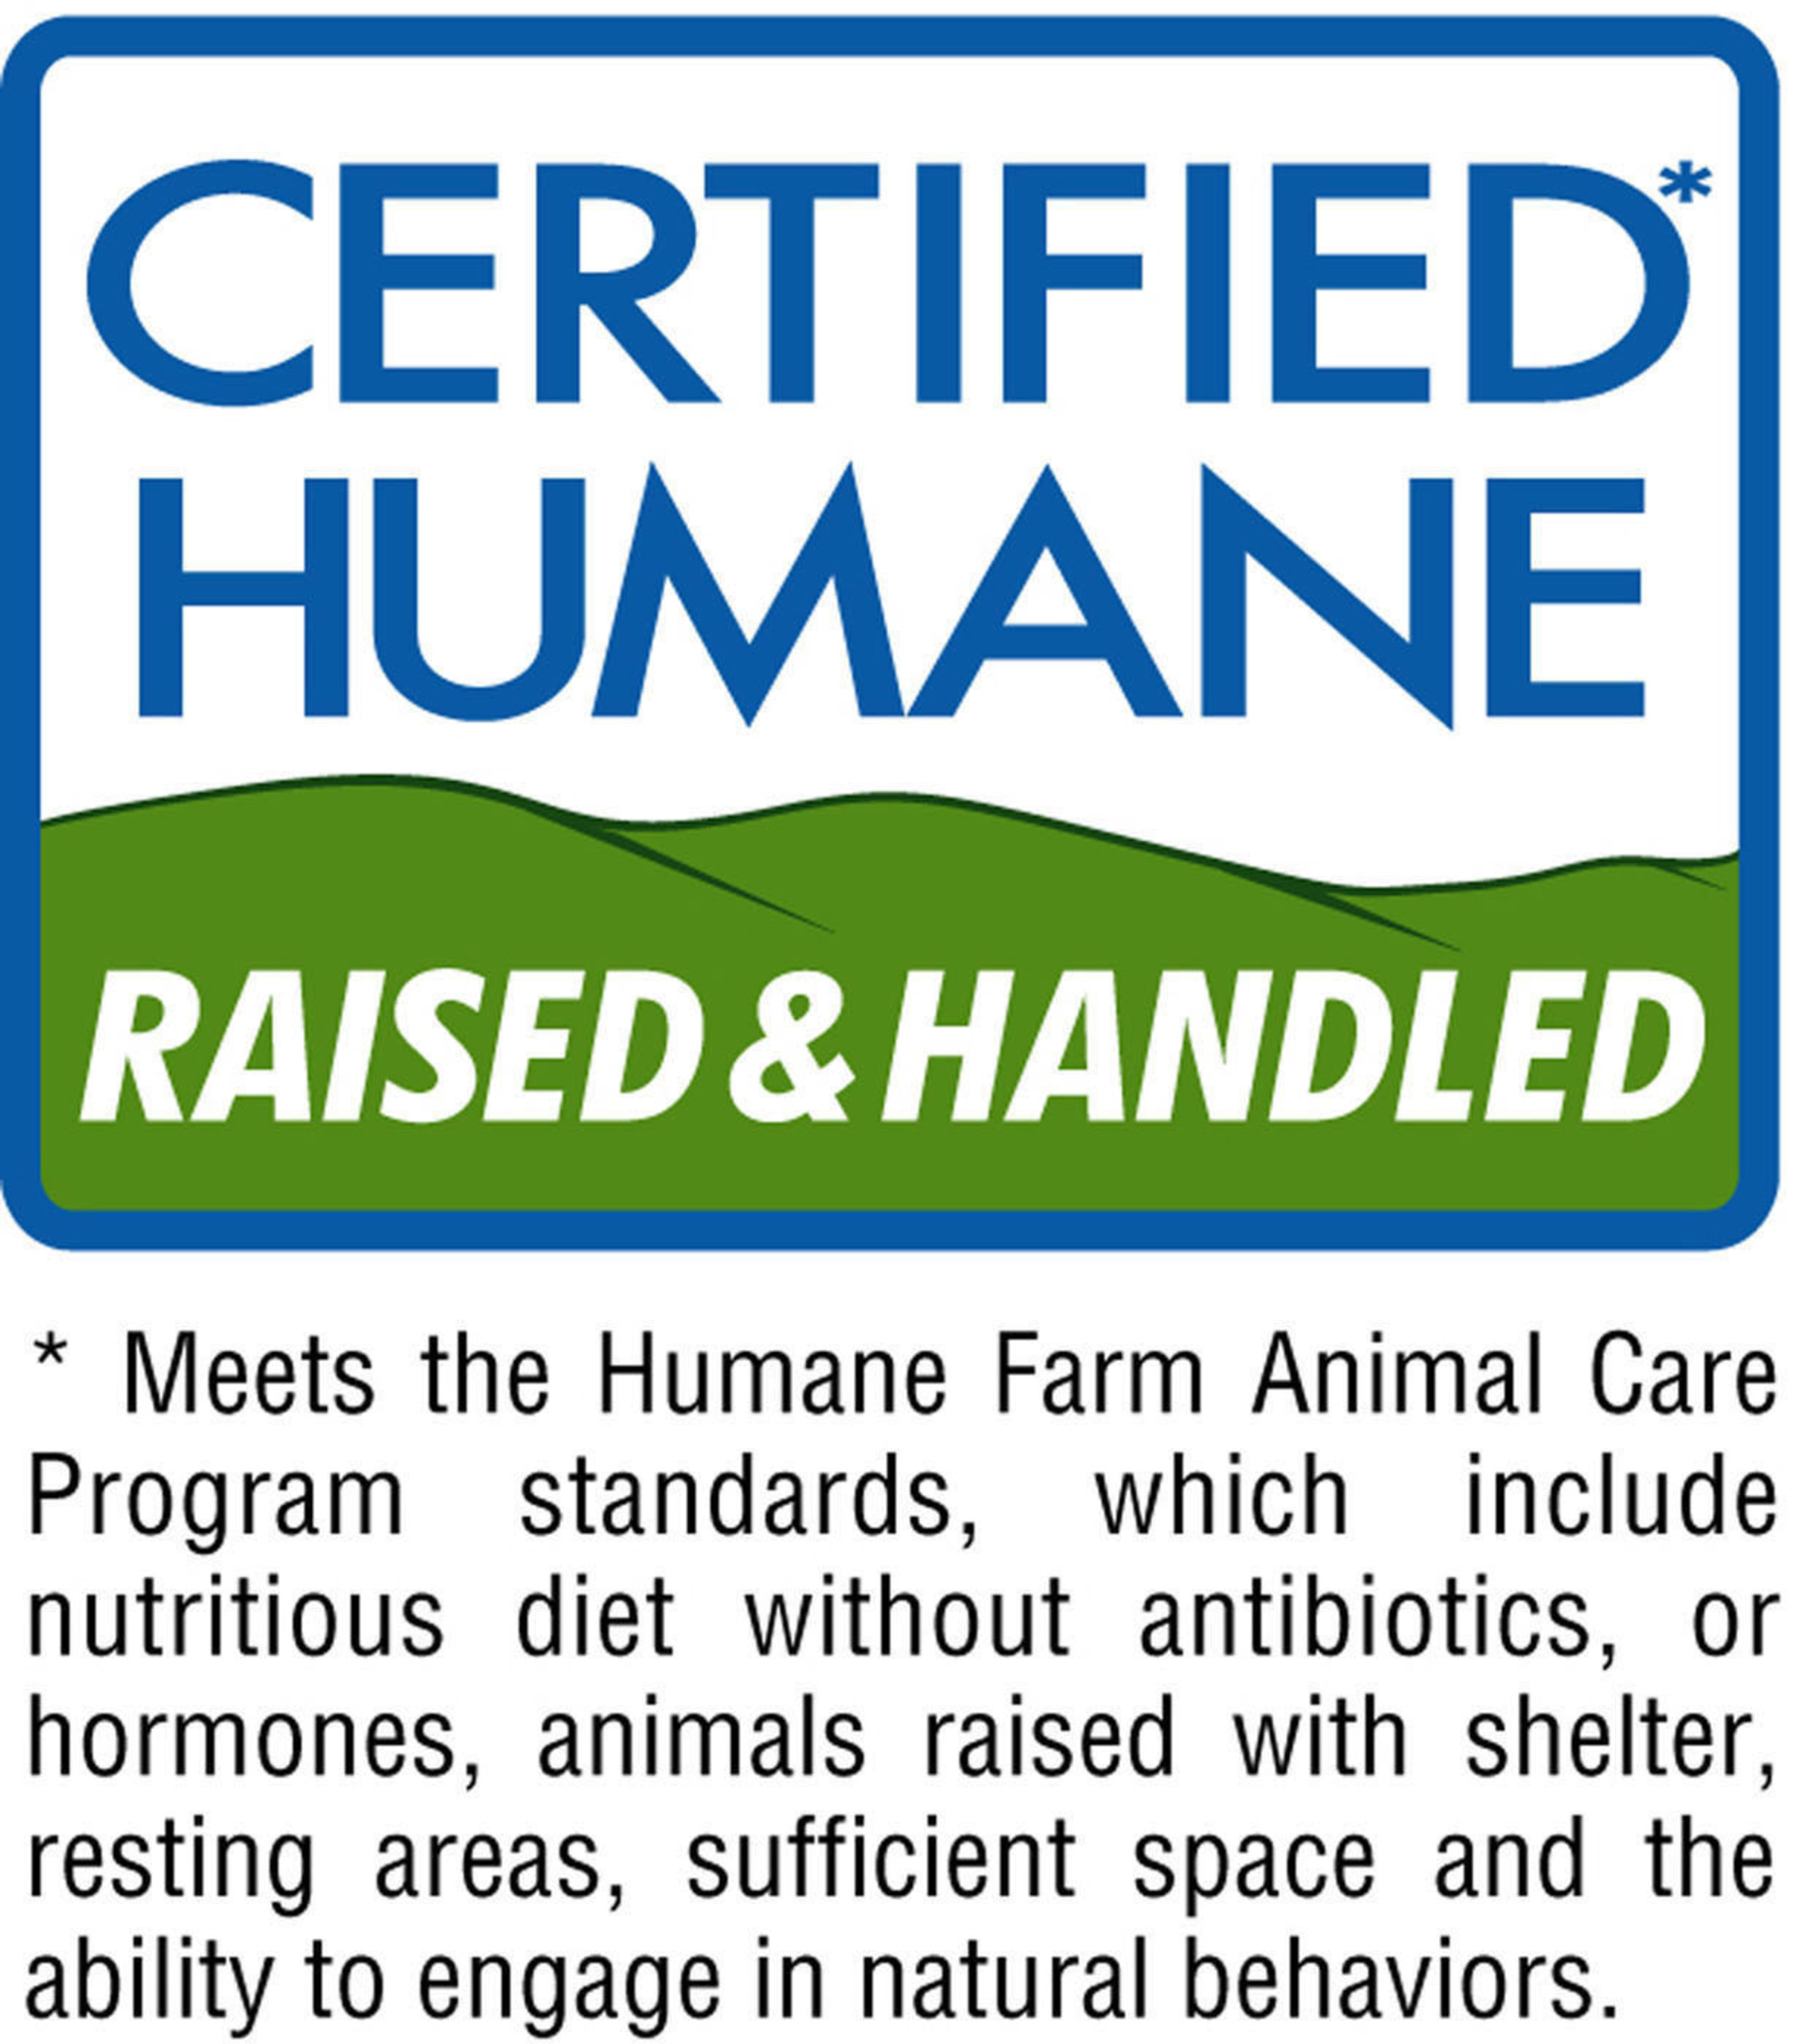 Certified Humane.